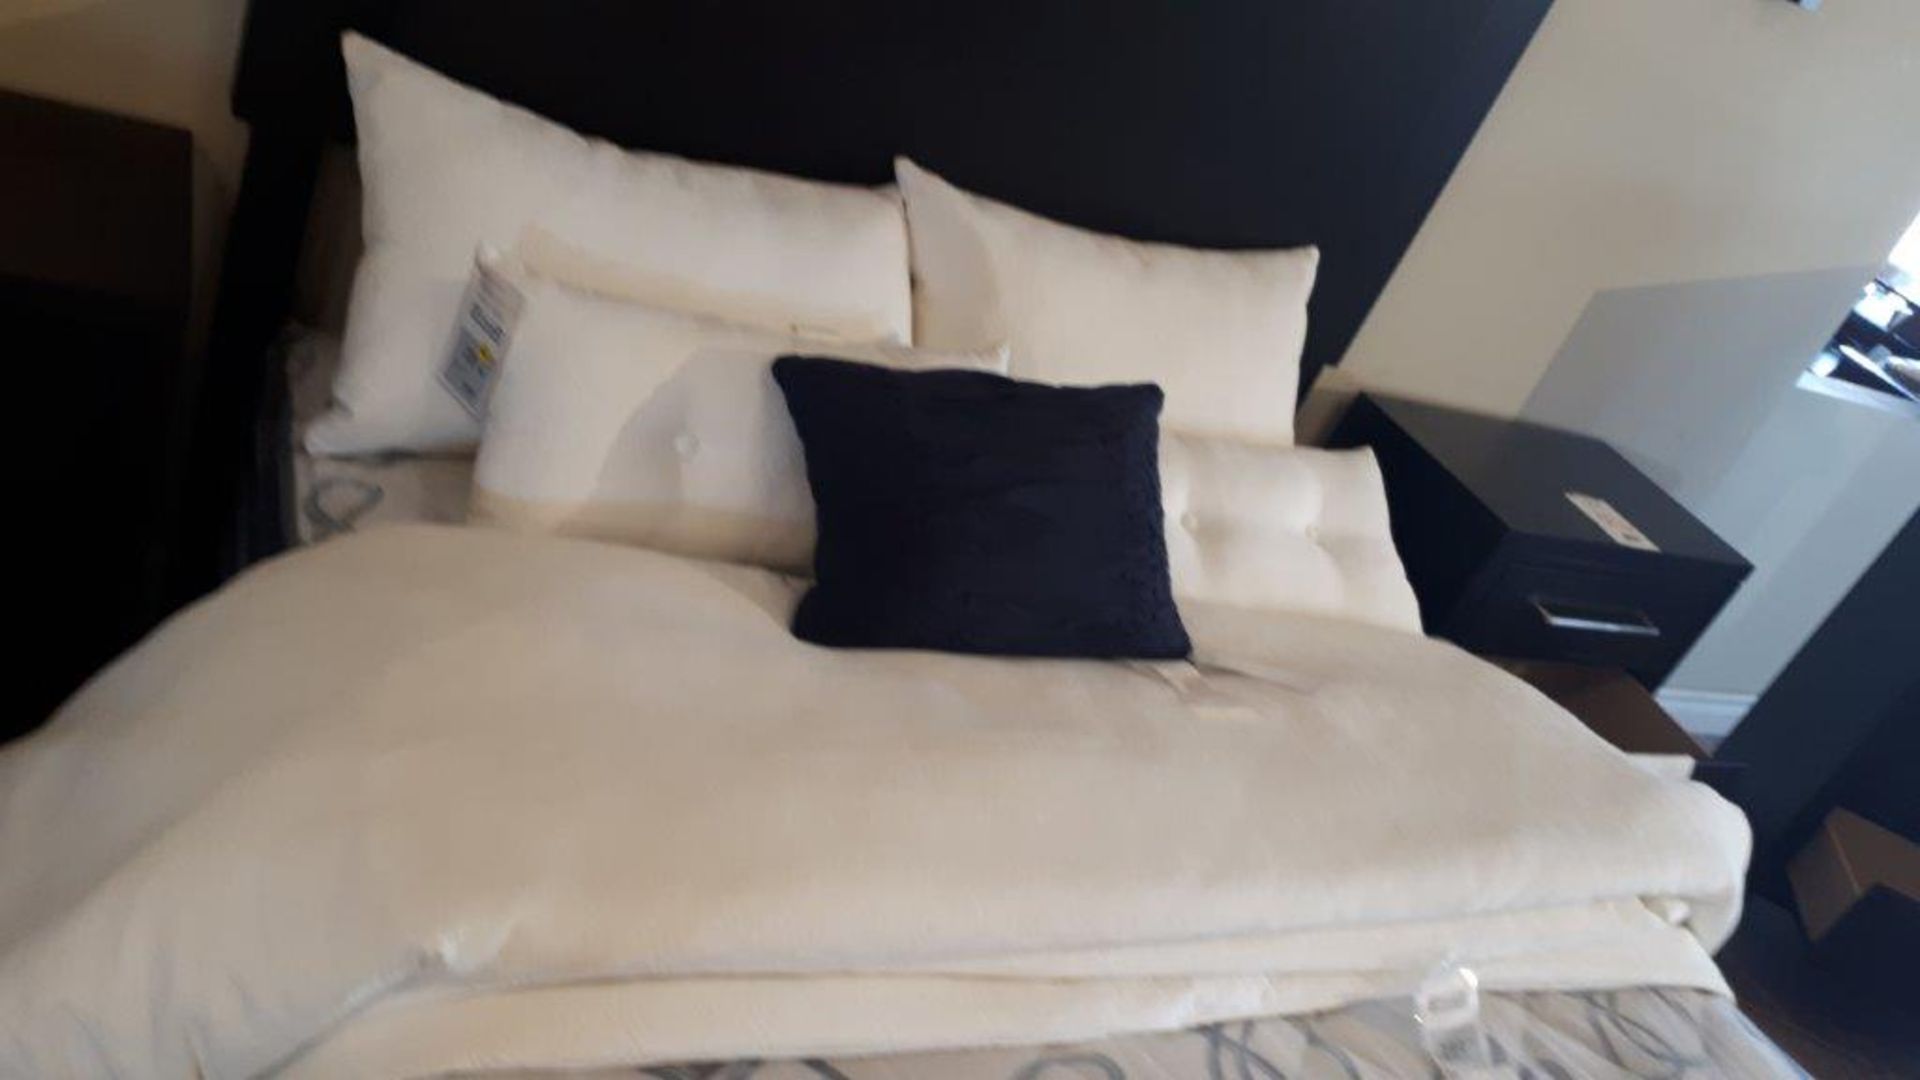 Pillows & sheet - Image 2 of 2